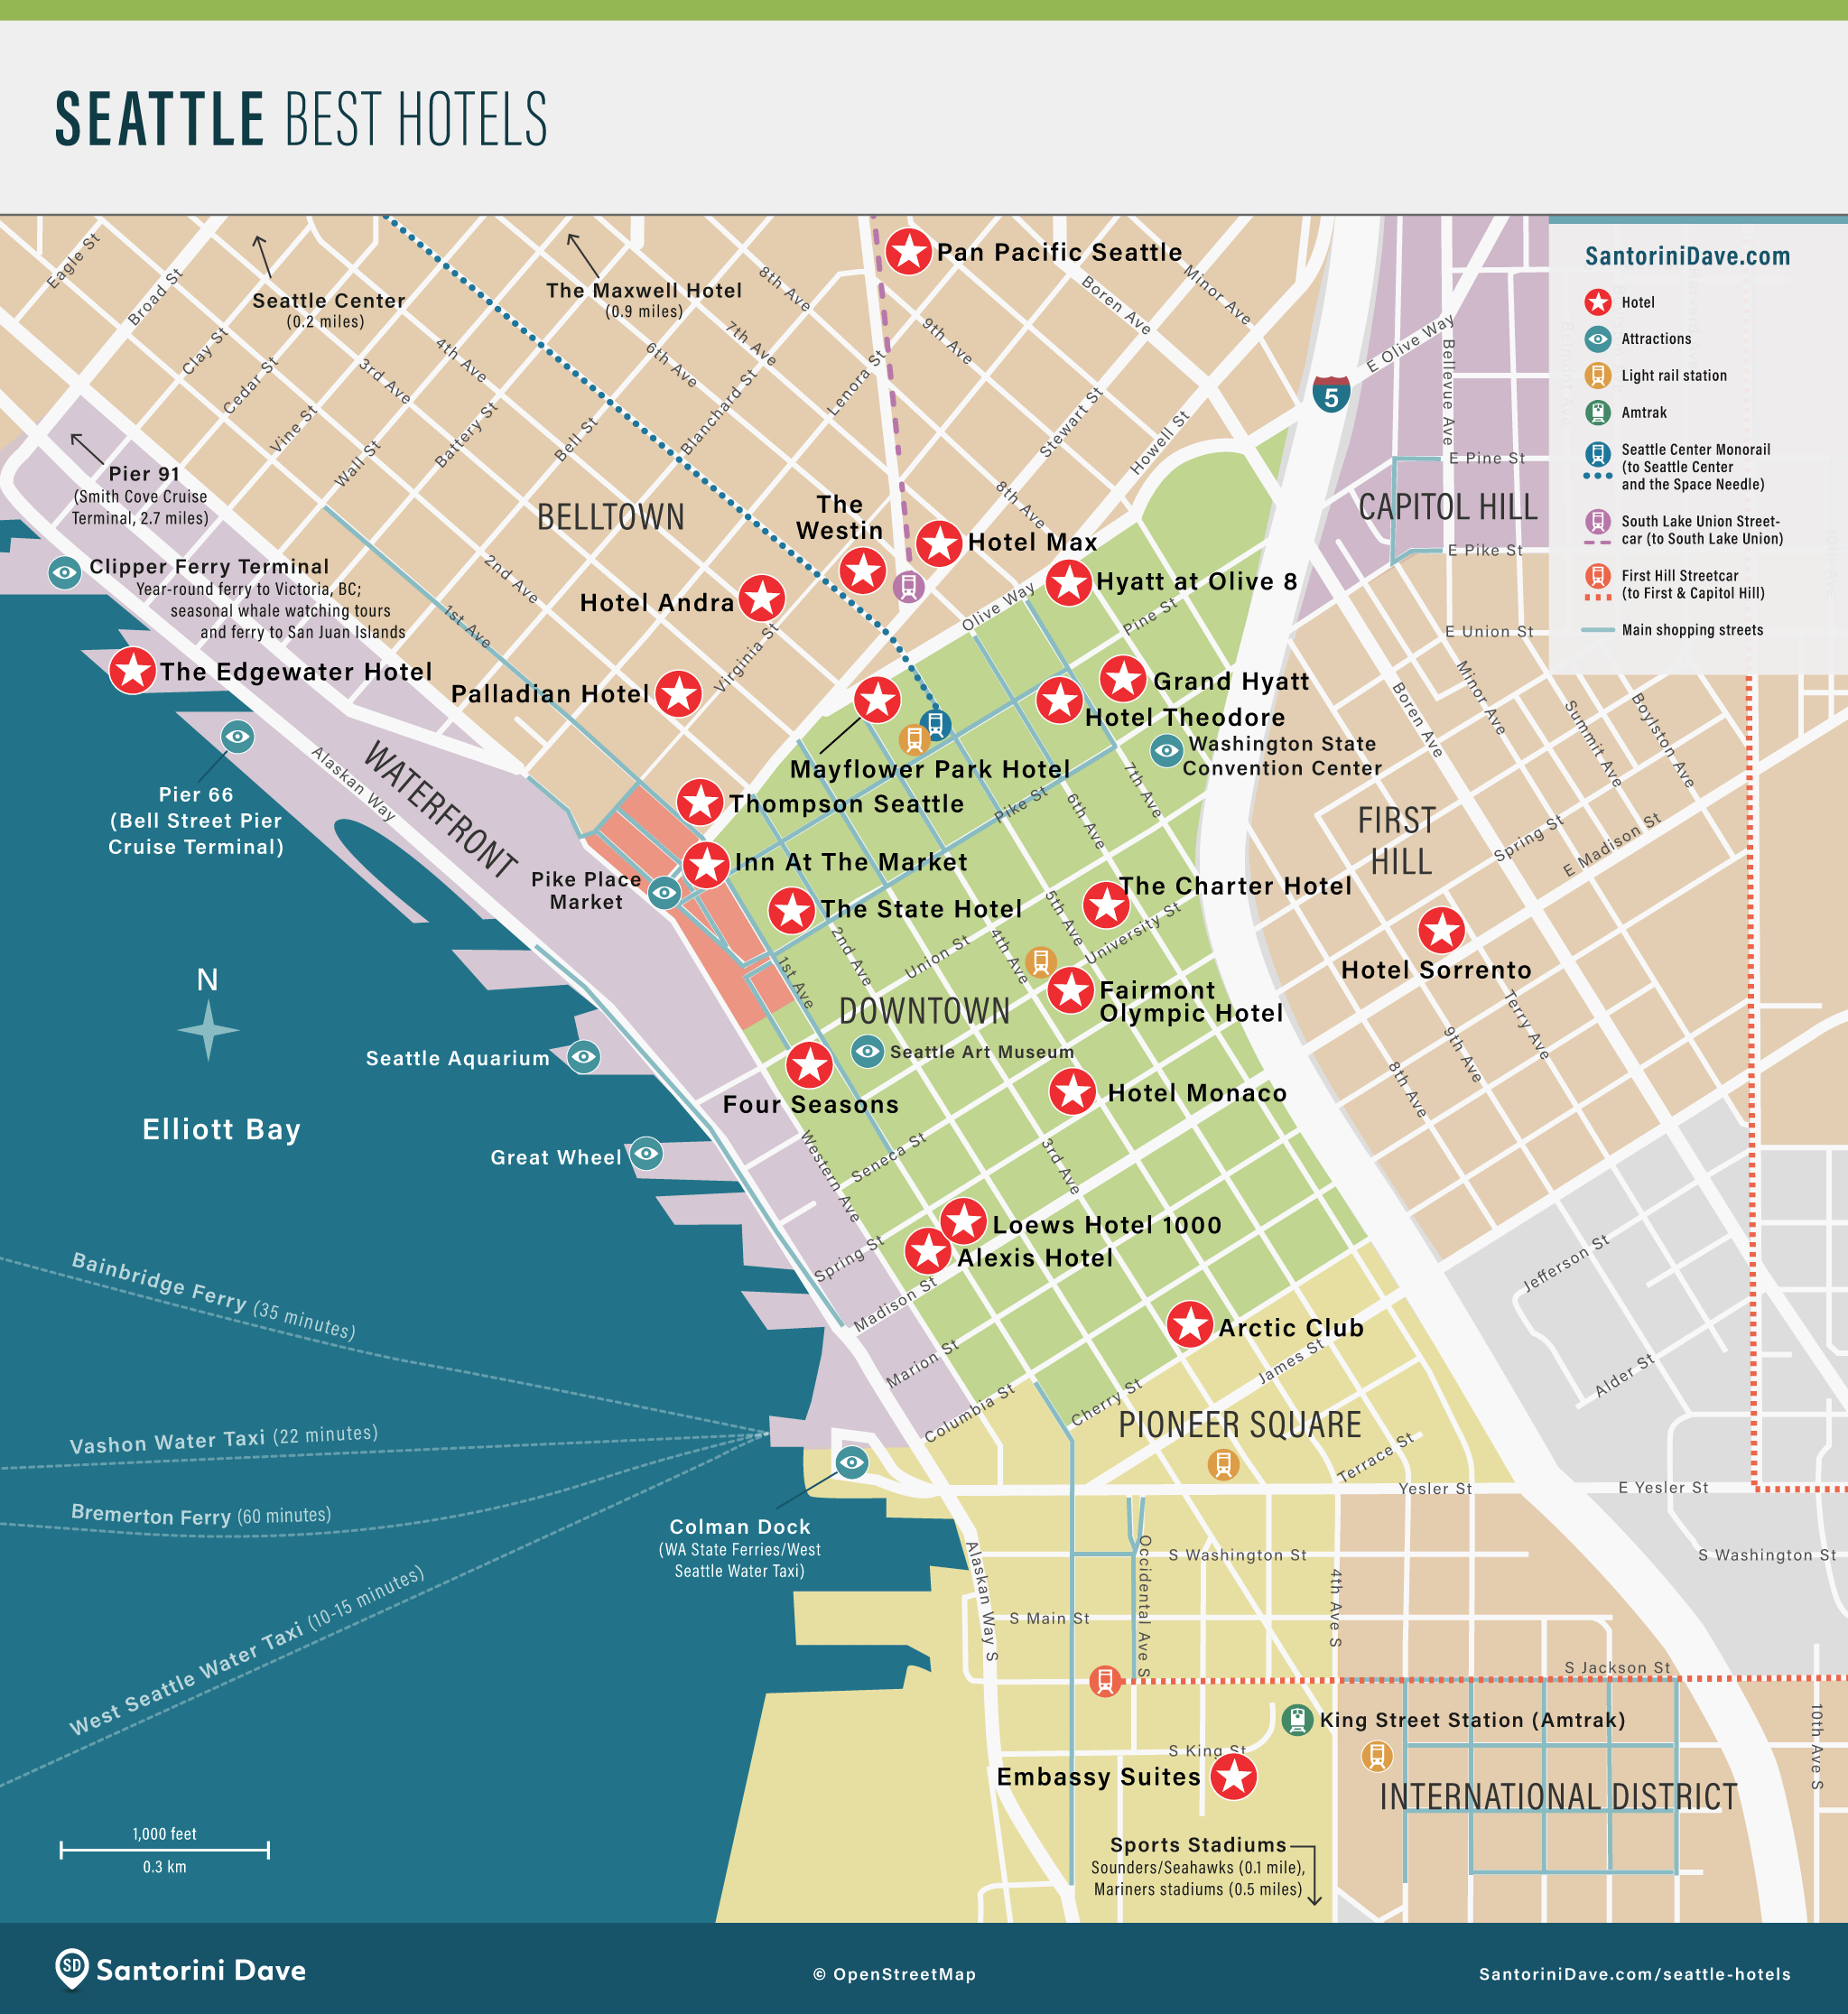 Downtown Seattle Best Hotels Map 